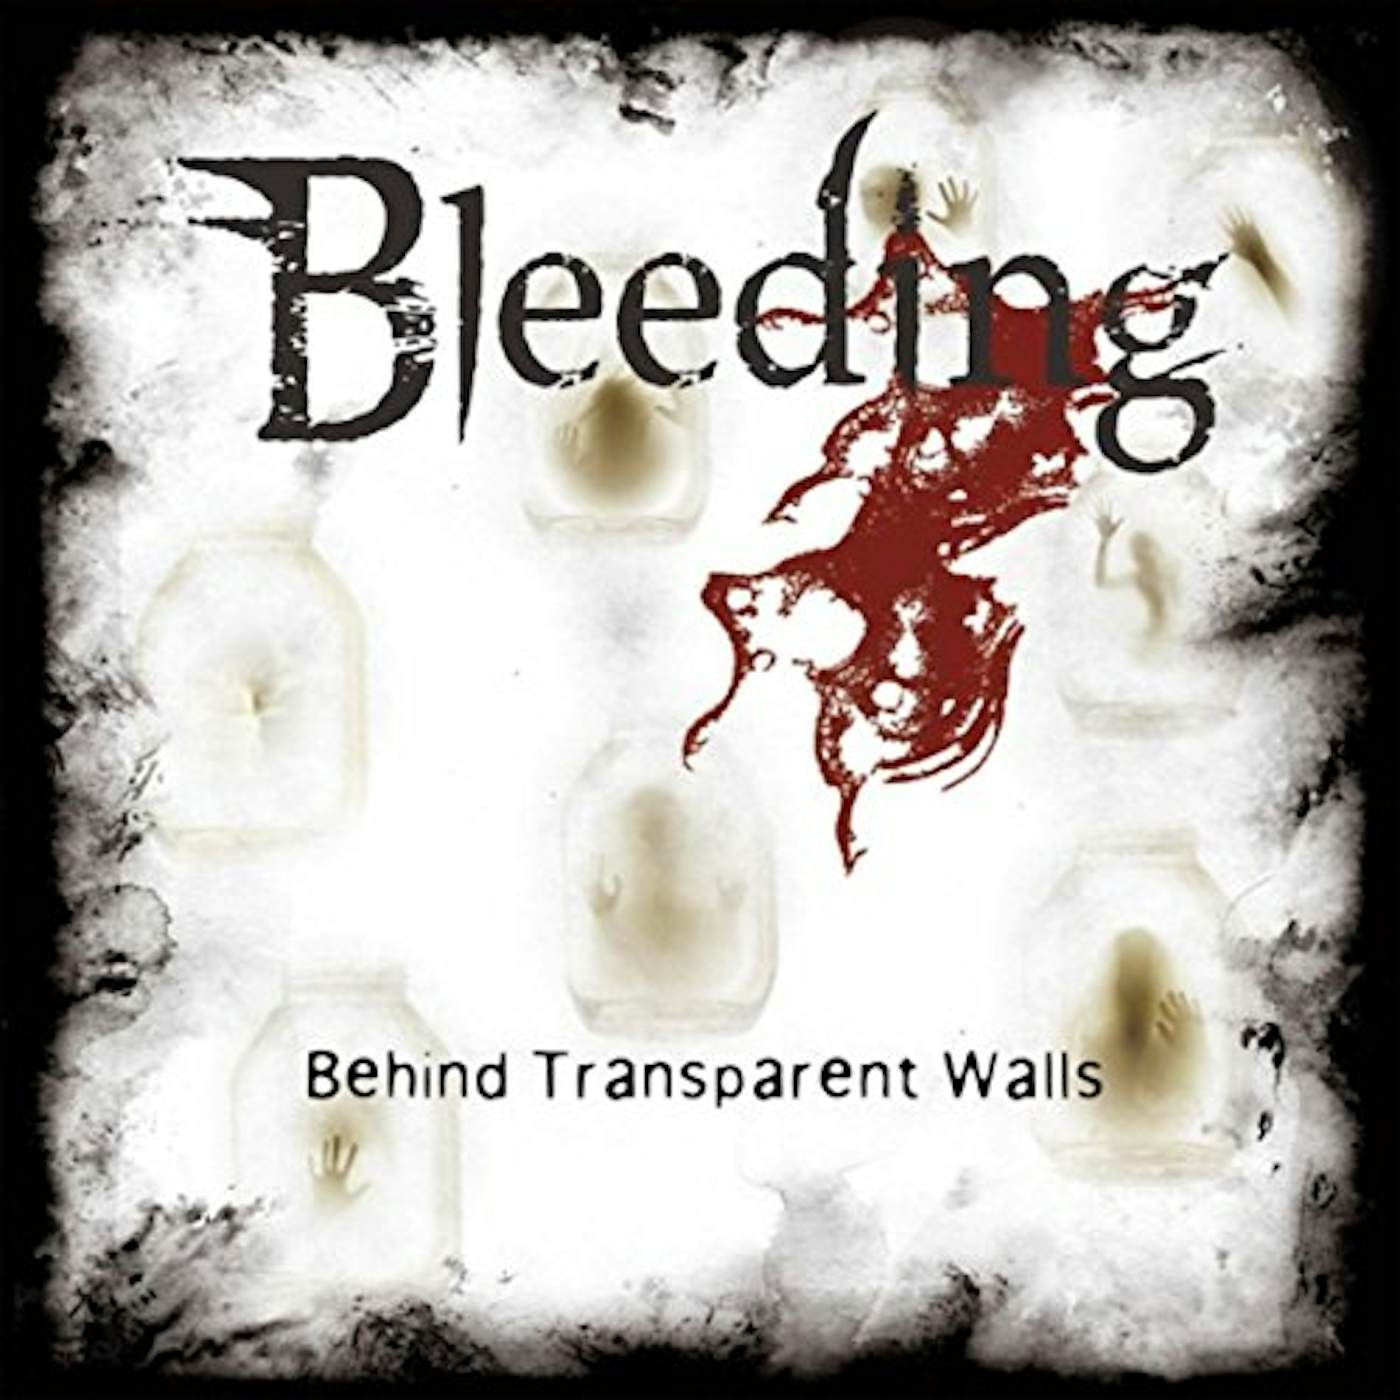 Bleeding BEHIND TRANSPARENT WALLS CD